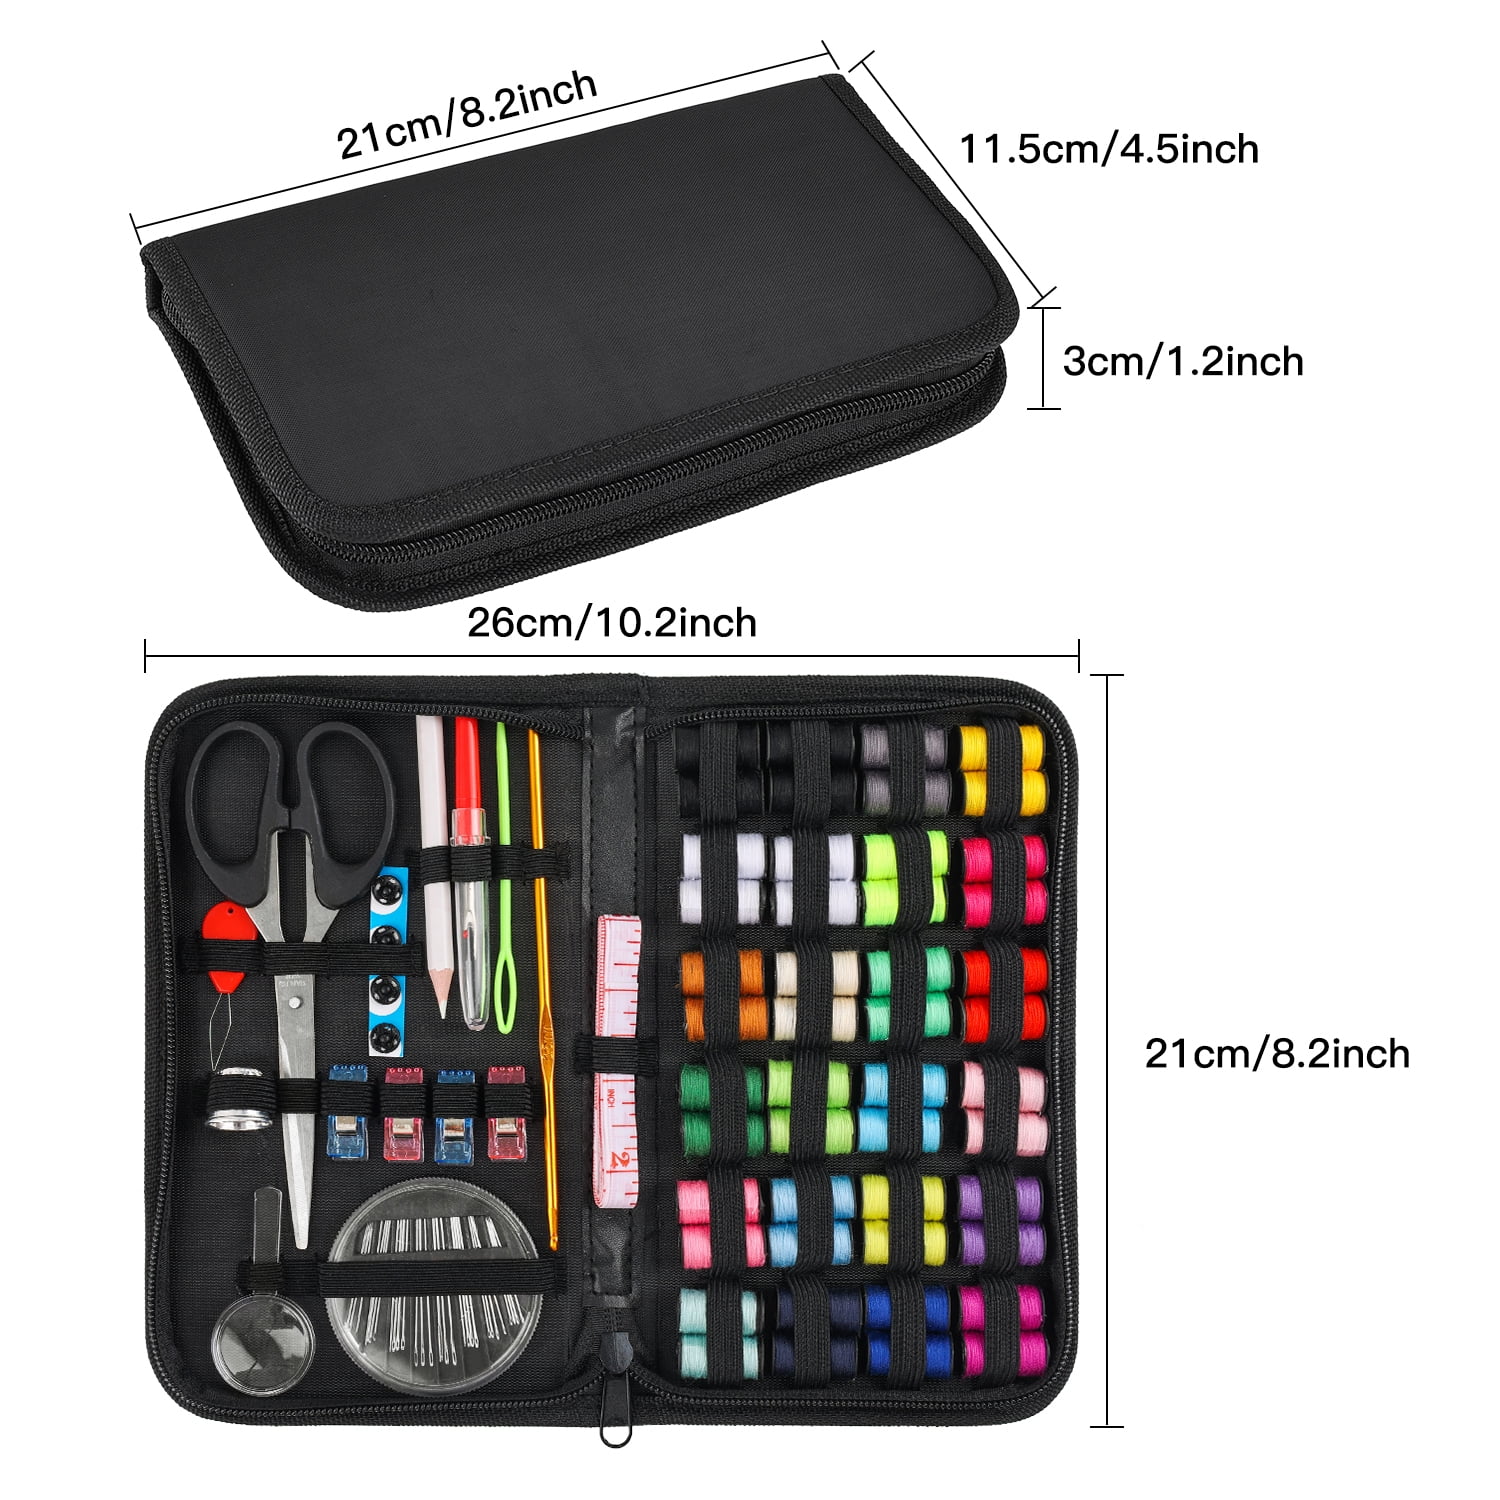 YLSHG Sewing Kit for Adults, 172 PCS Premium Traveler,DIY,Kids